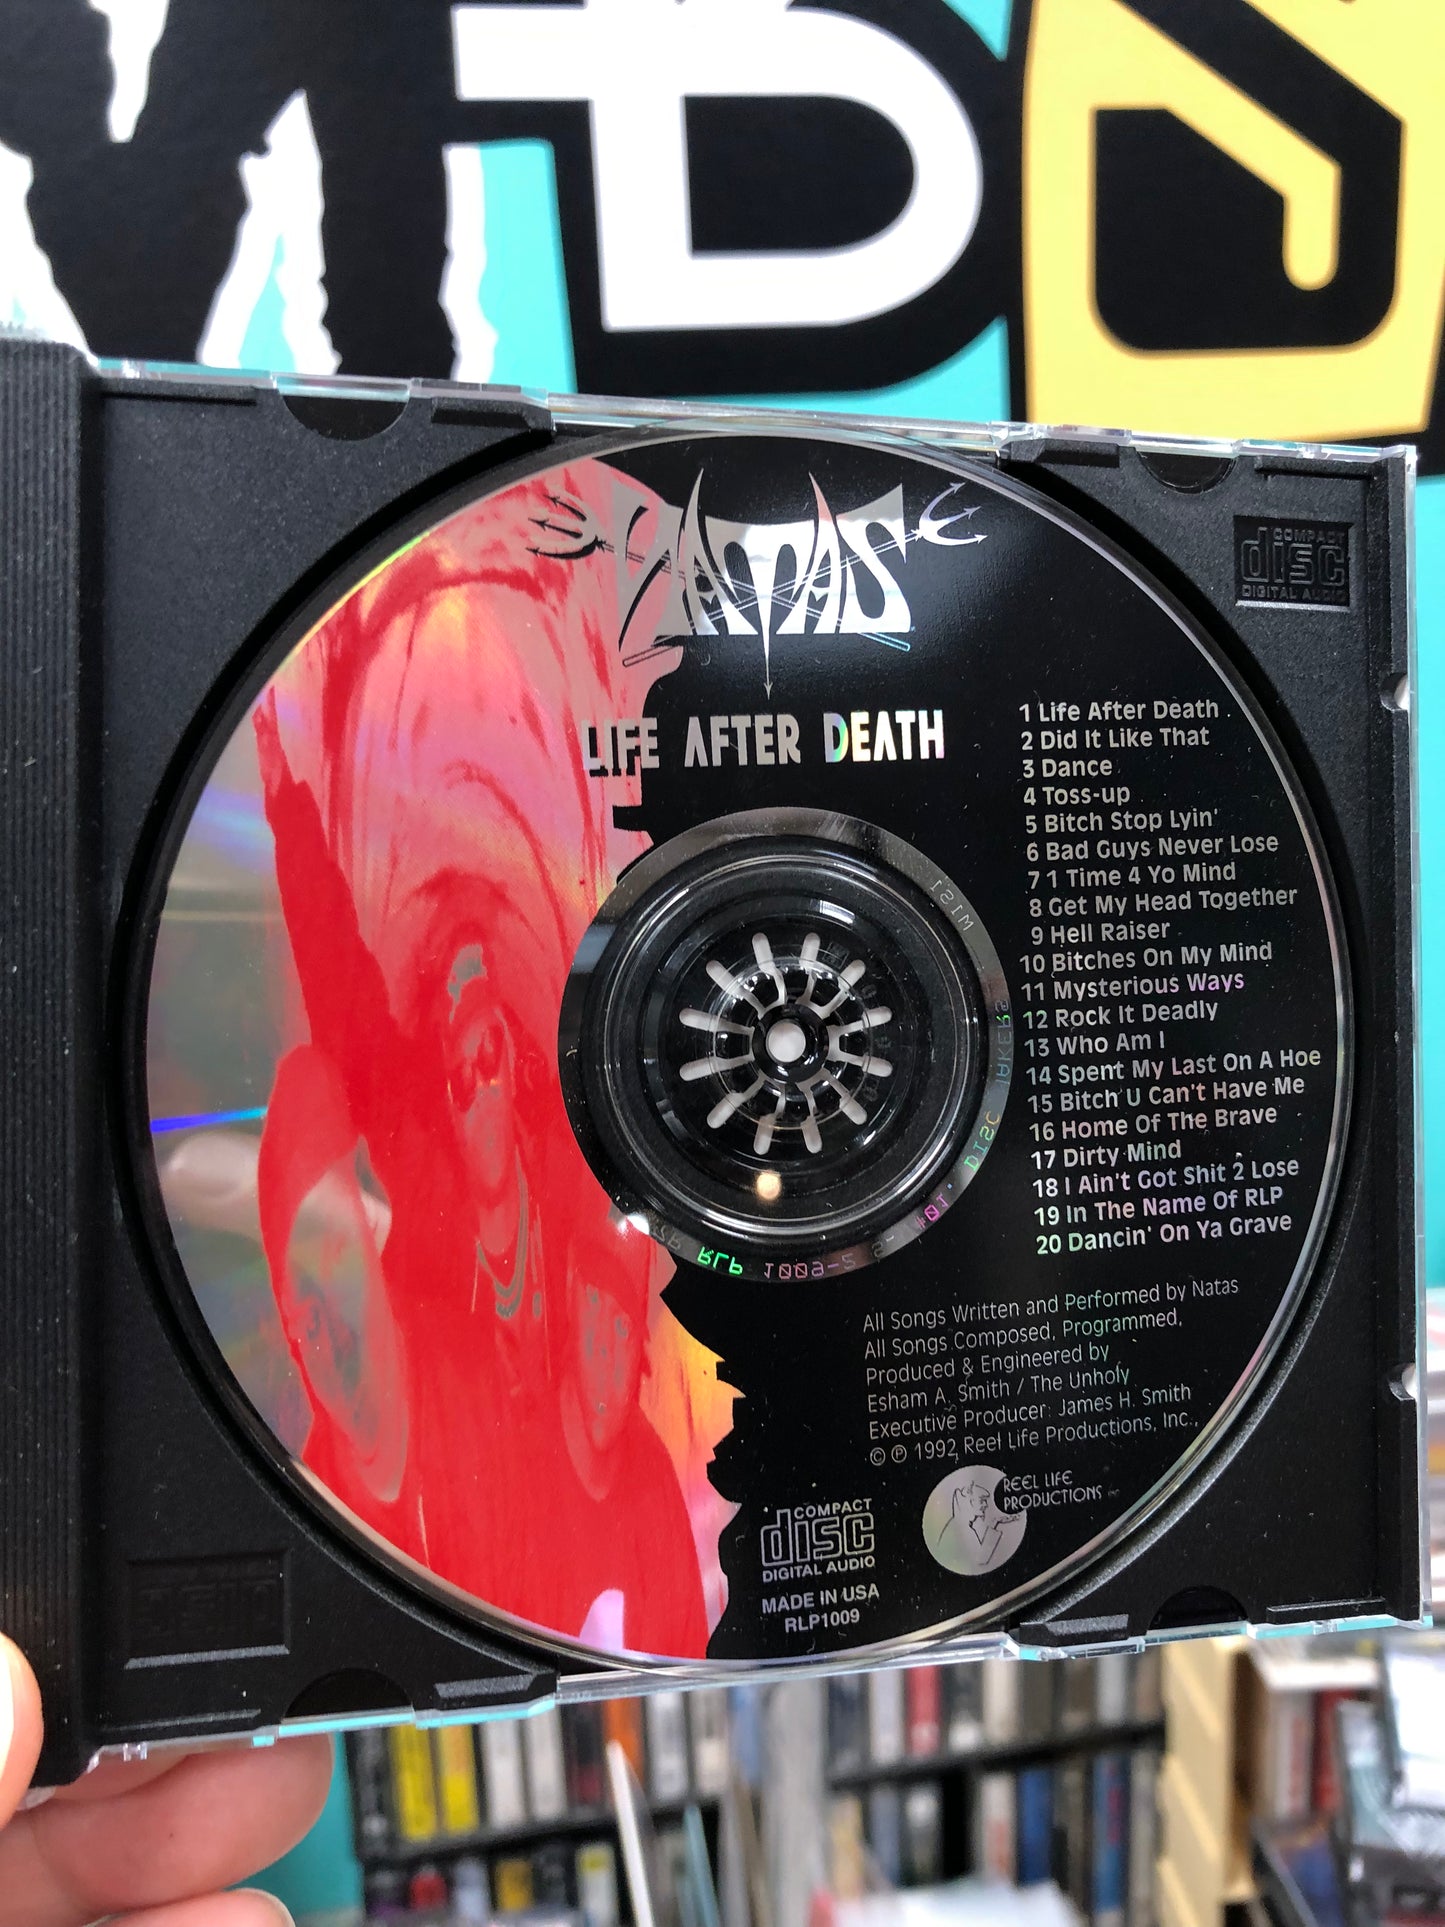 Natas: Life After Death, 1st pressing, US 1992